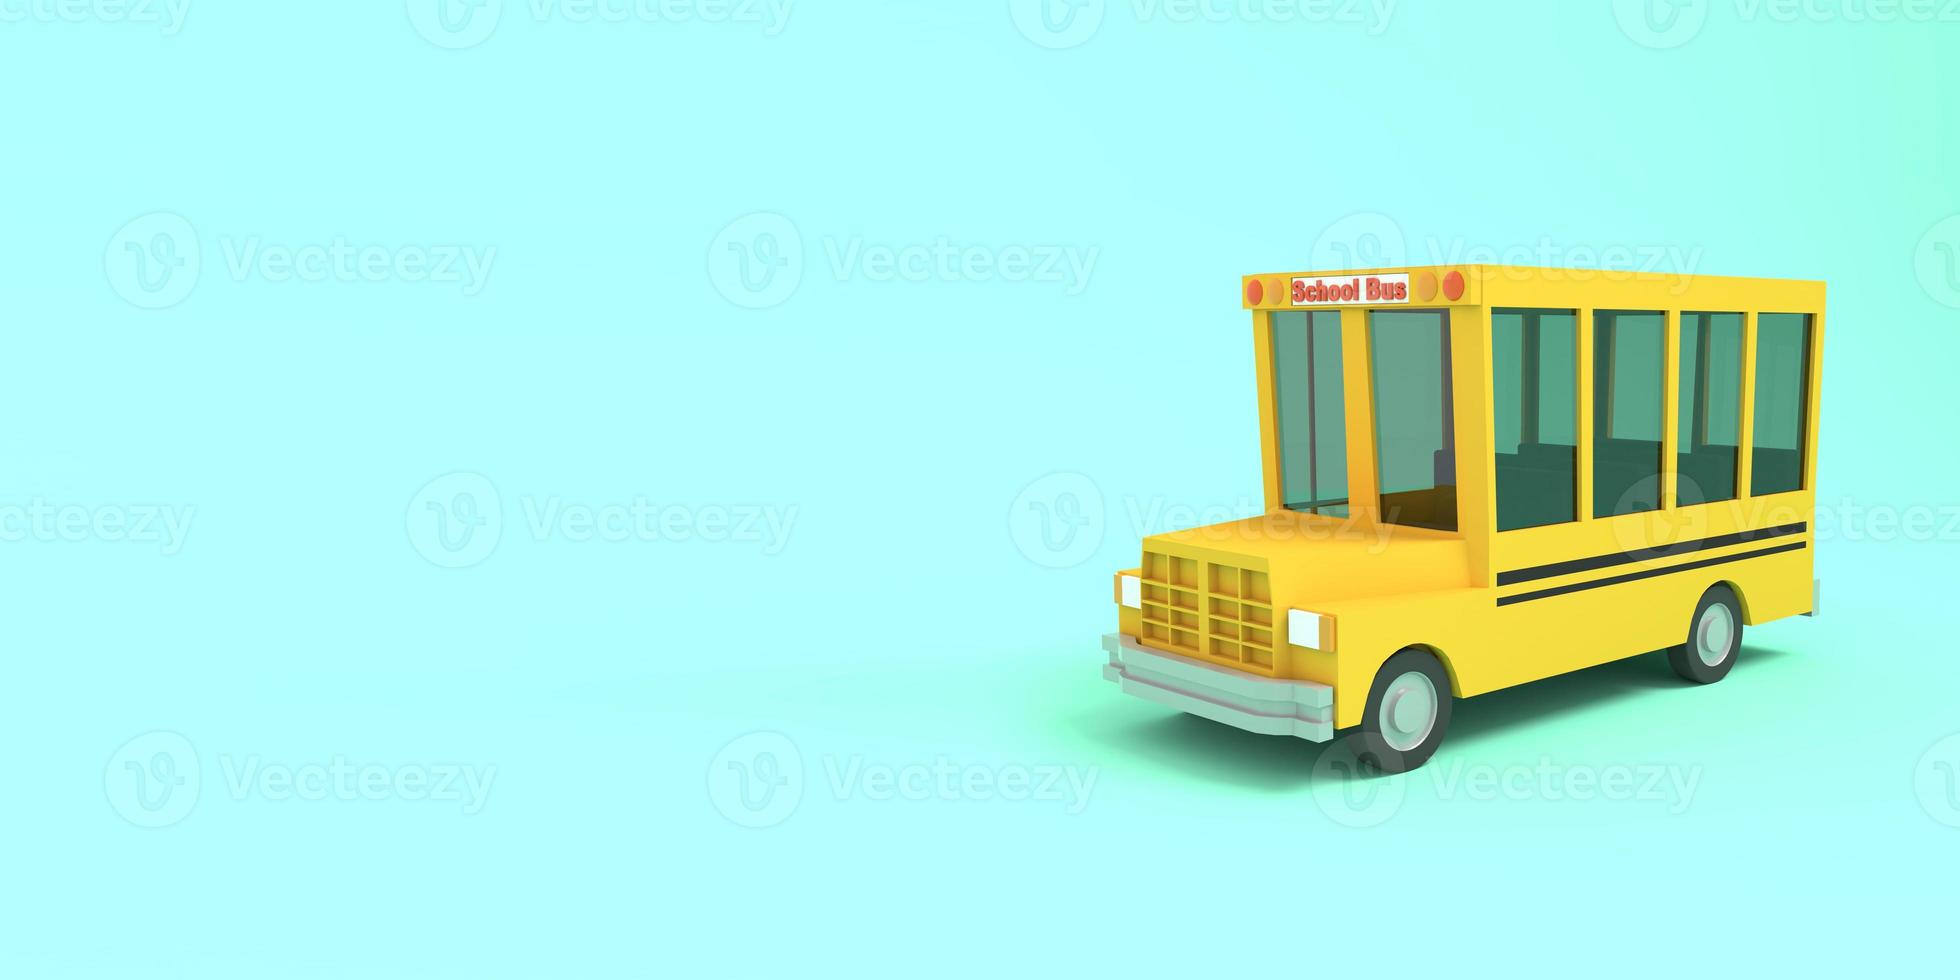 autobús escolar de dibujos animados amarillo sobre un fondo azul. simple ilustración escolar aislada. representación 3d foto